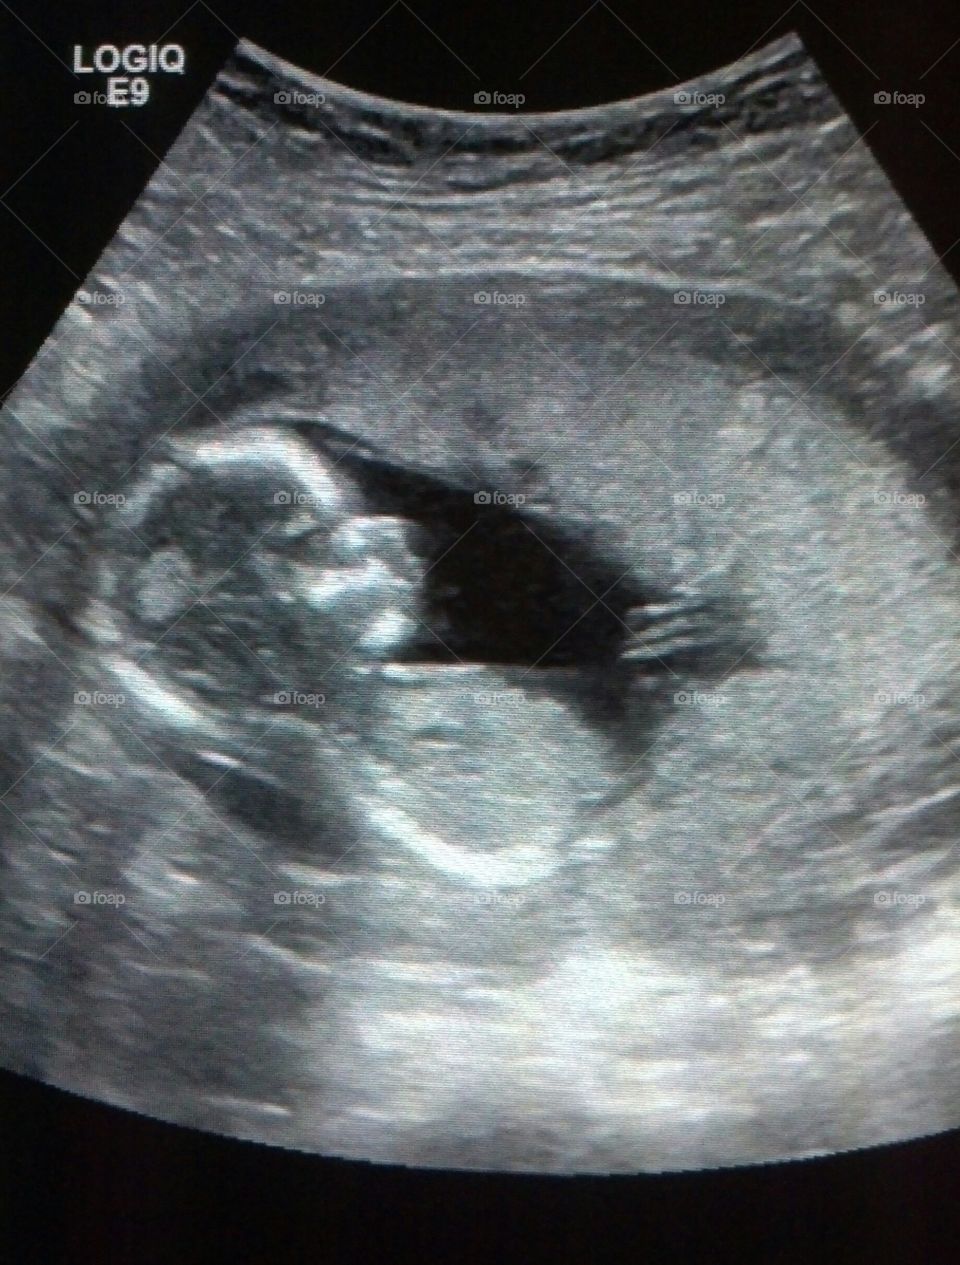 ultrasound of my baby girl